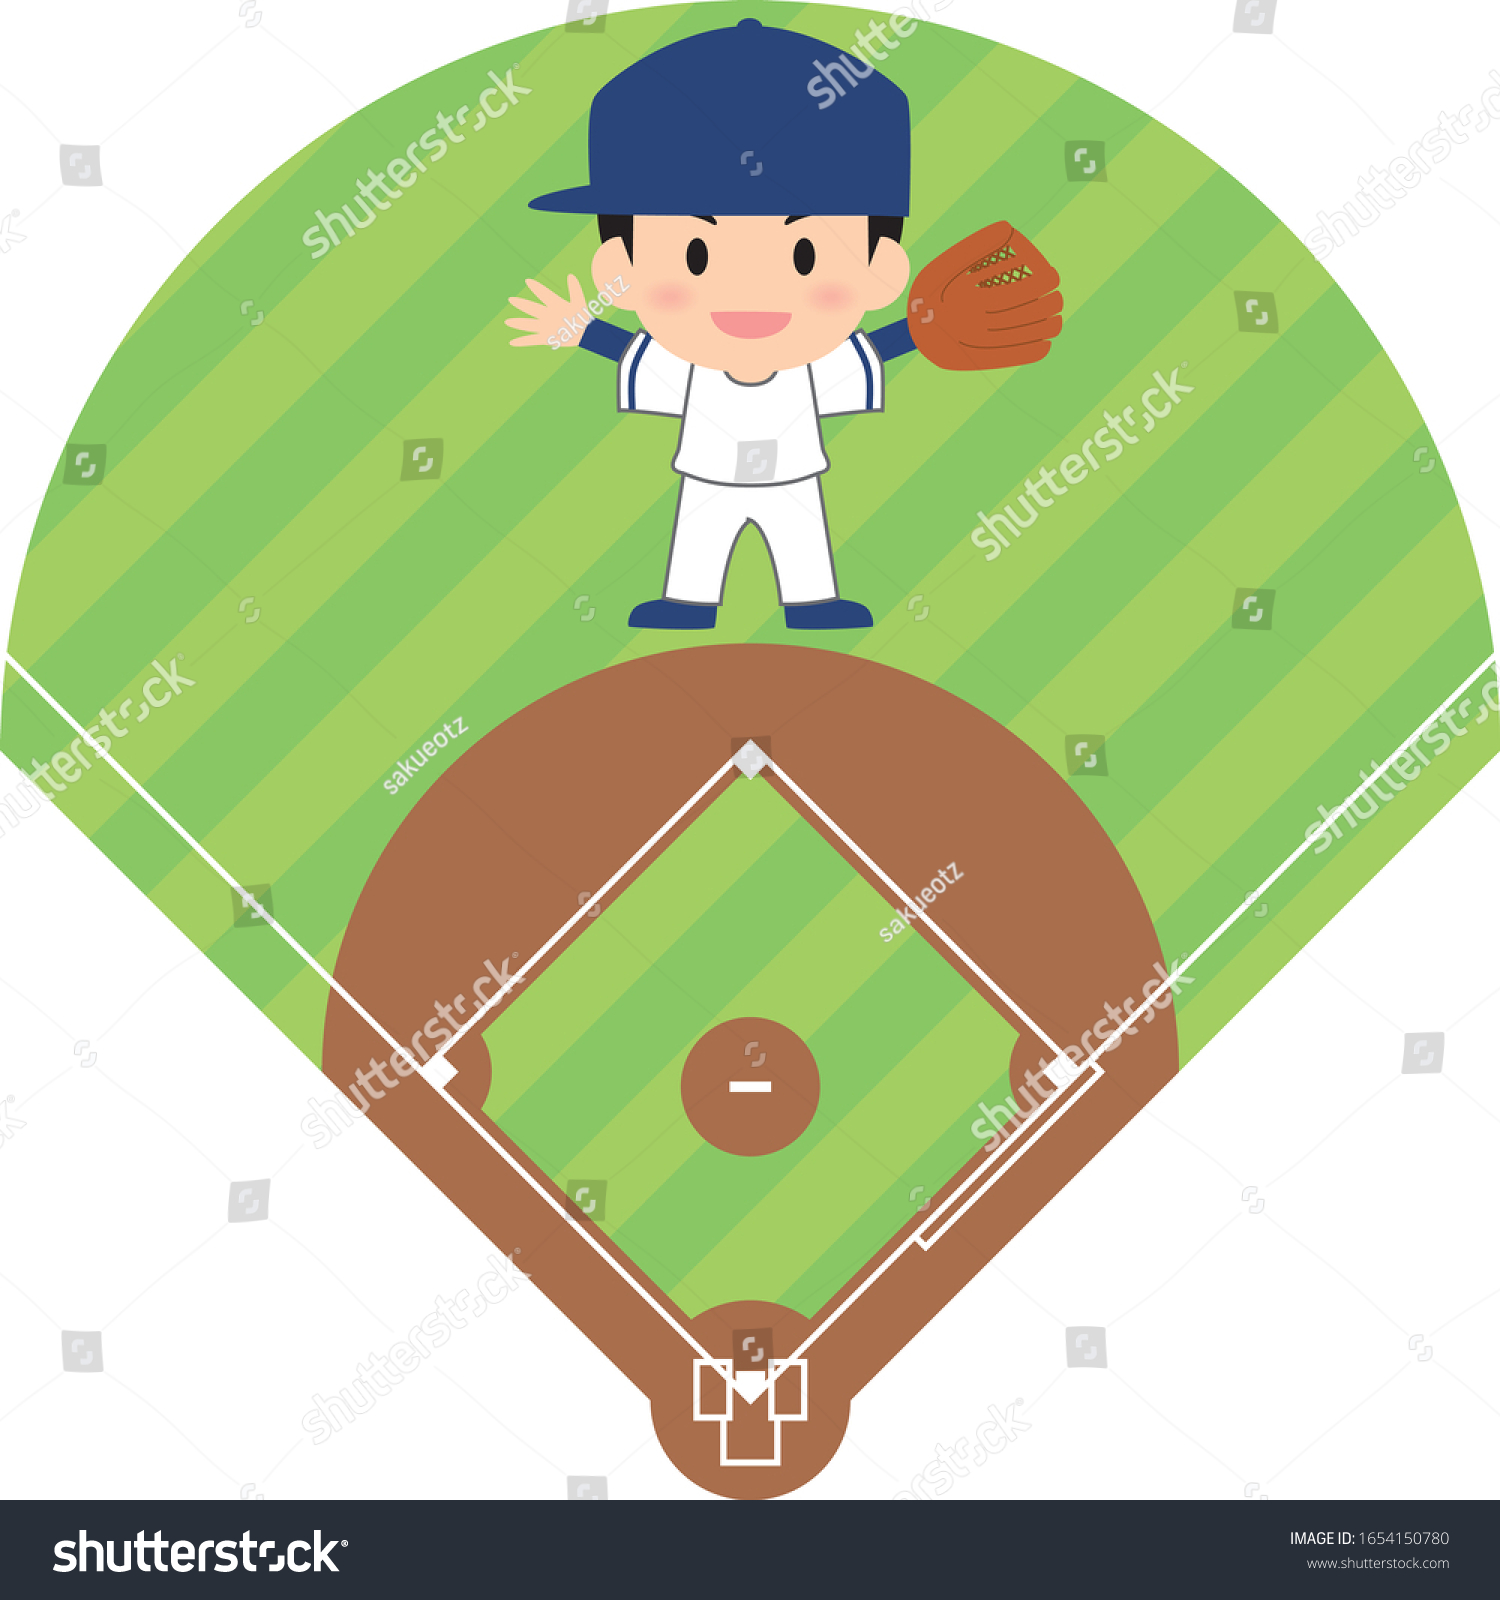 Center Field In Baseball